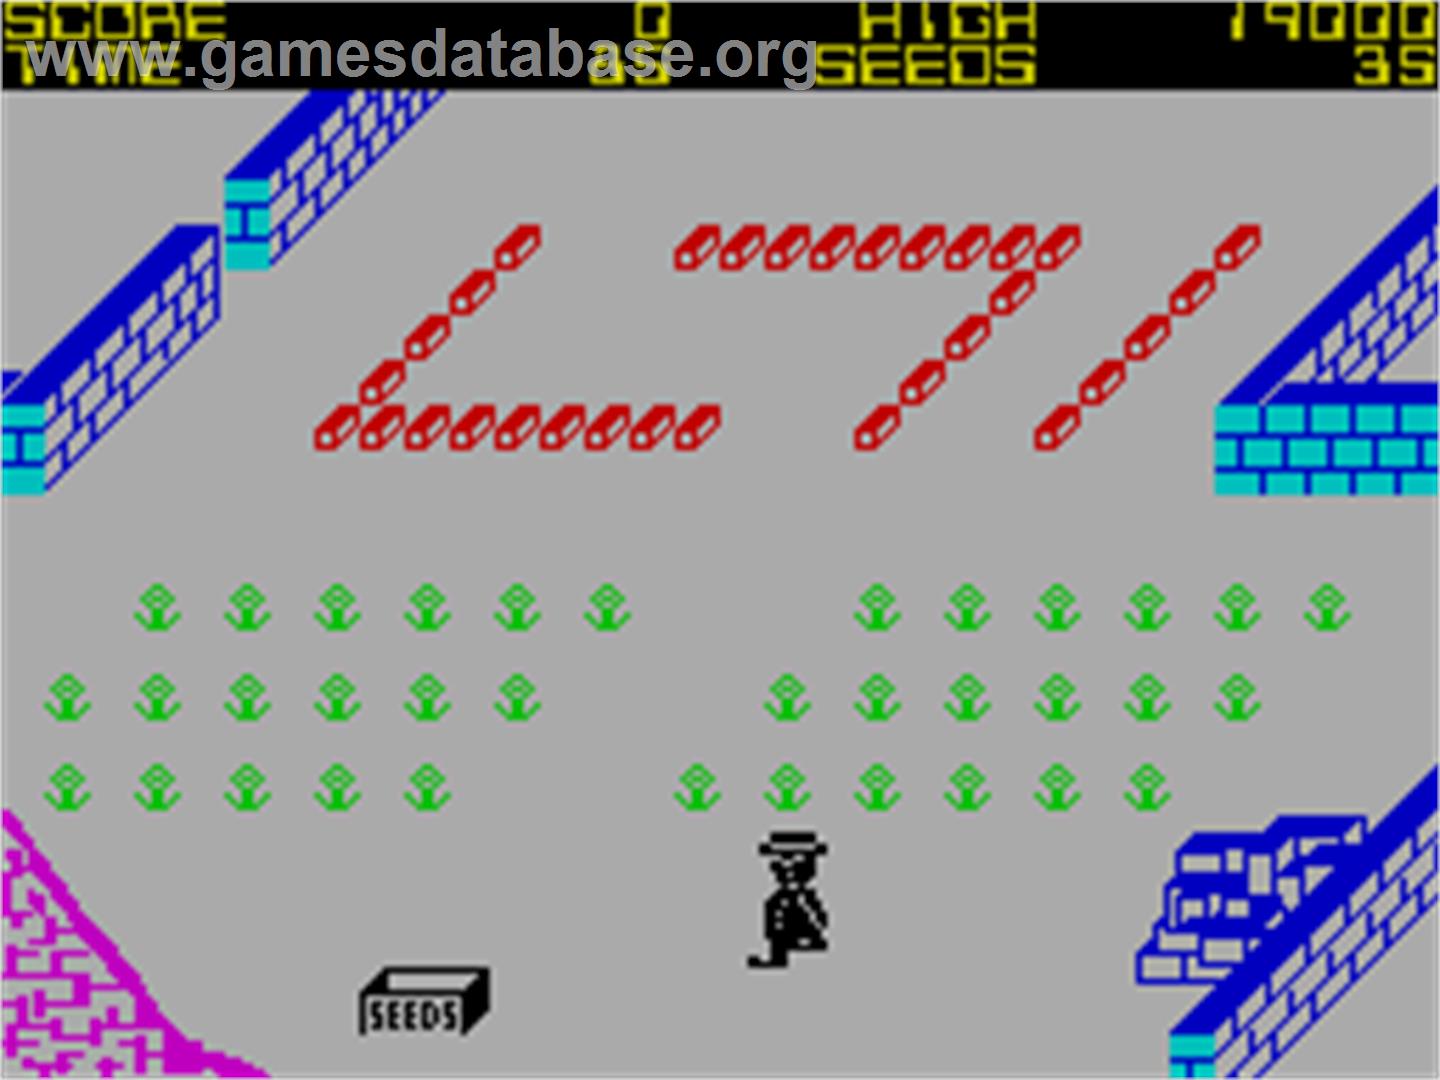 Pedro - Sinclair ZX Spectrum - Artwork - In Game